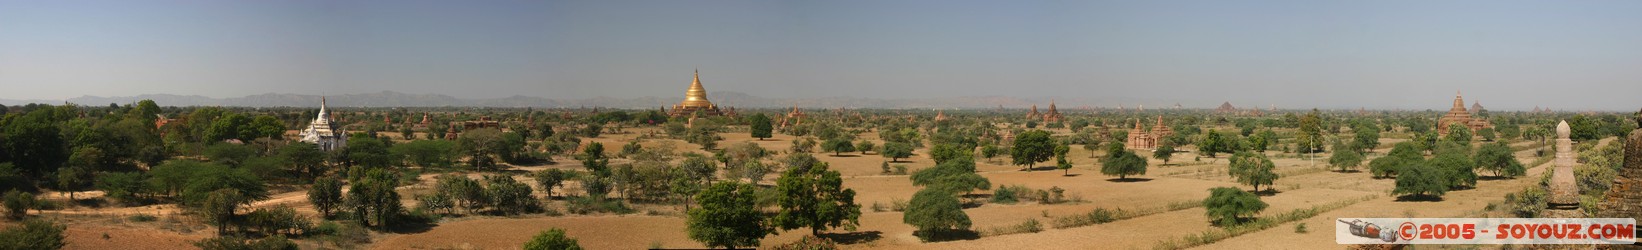 Bagan - Dhamma-ya-za-ka Zedi - panorama
Mots-clés: myanmar Burma Birmanie panorama Ruines Pagode